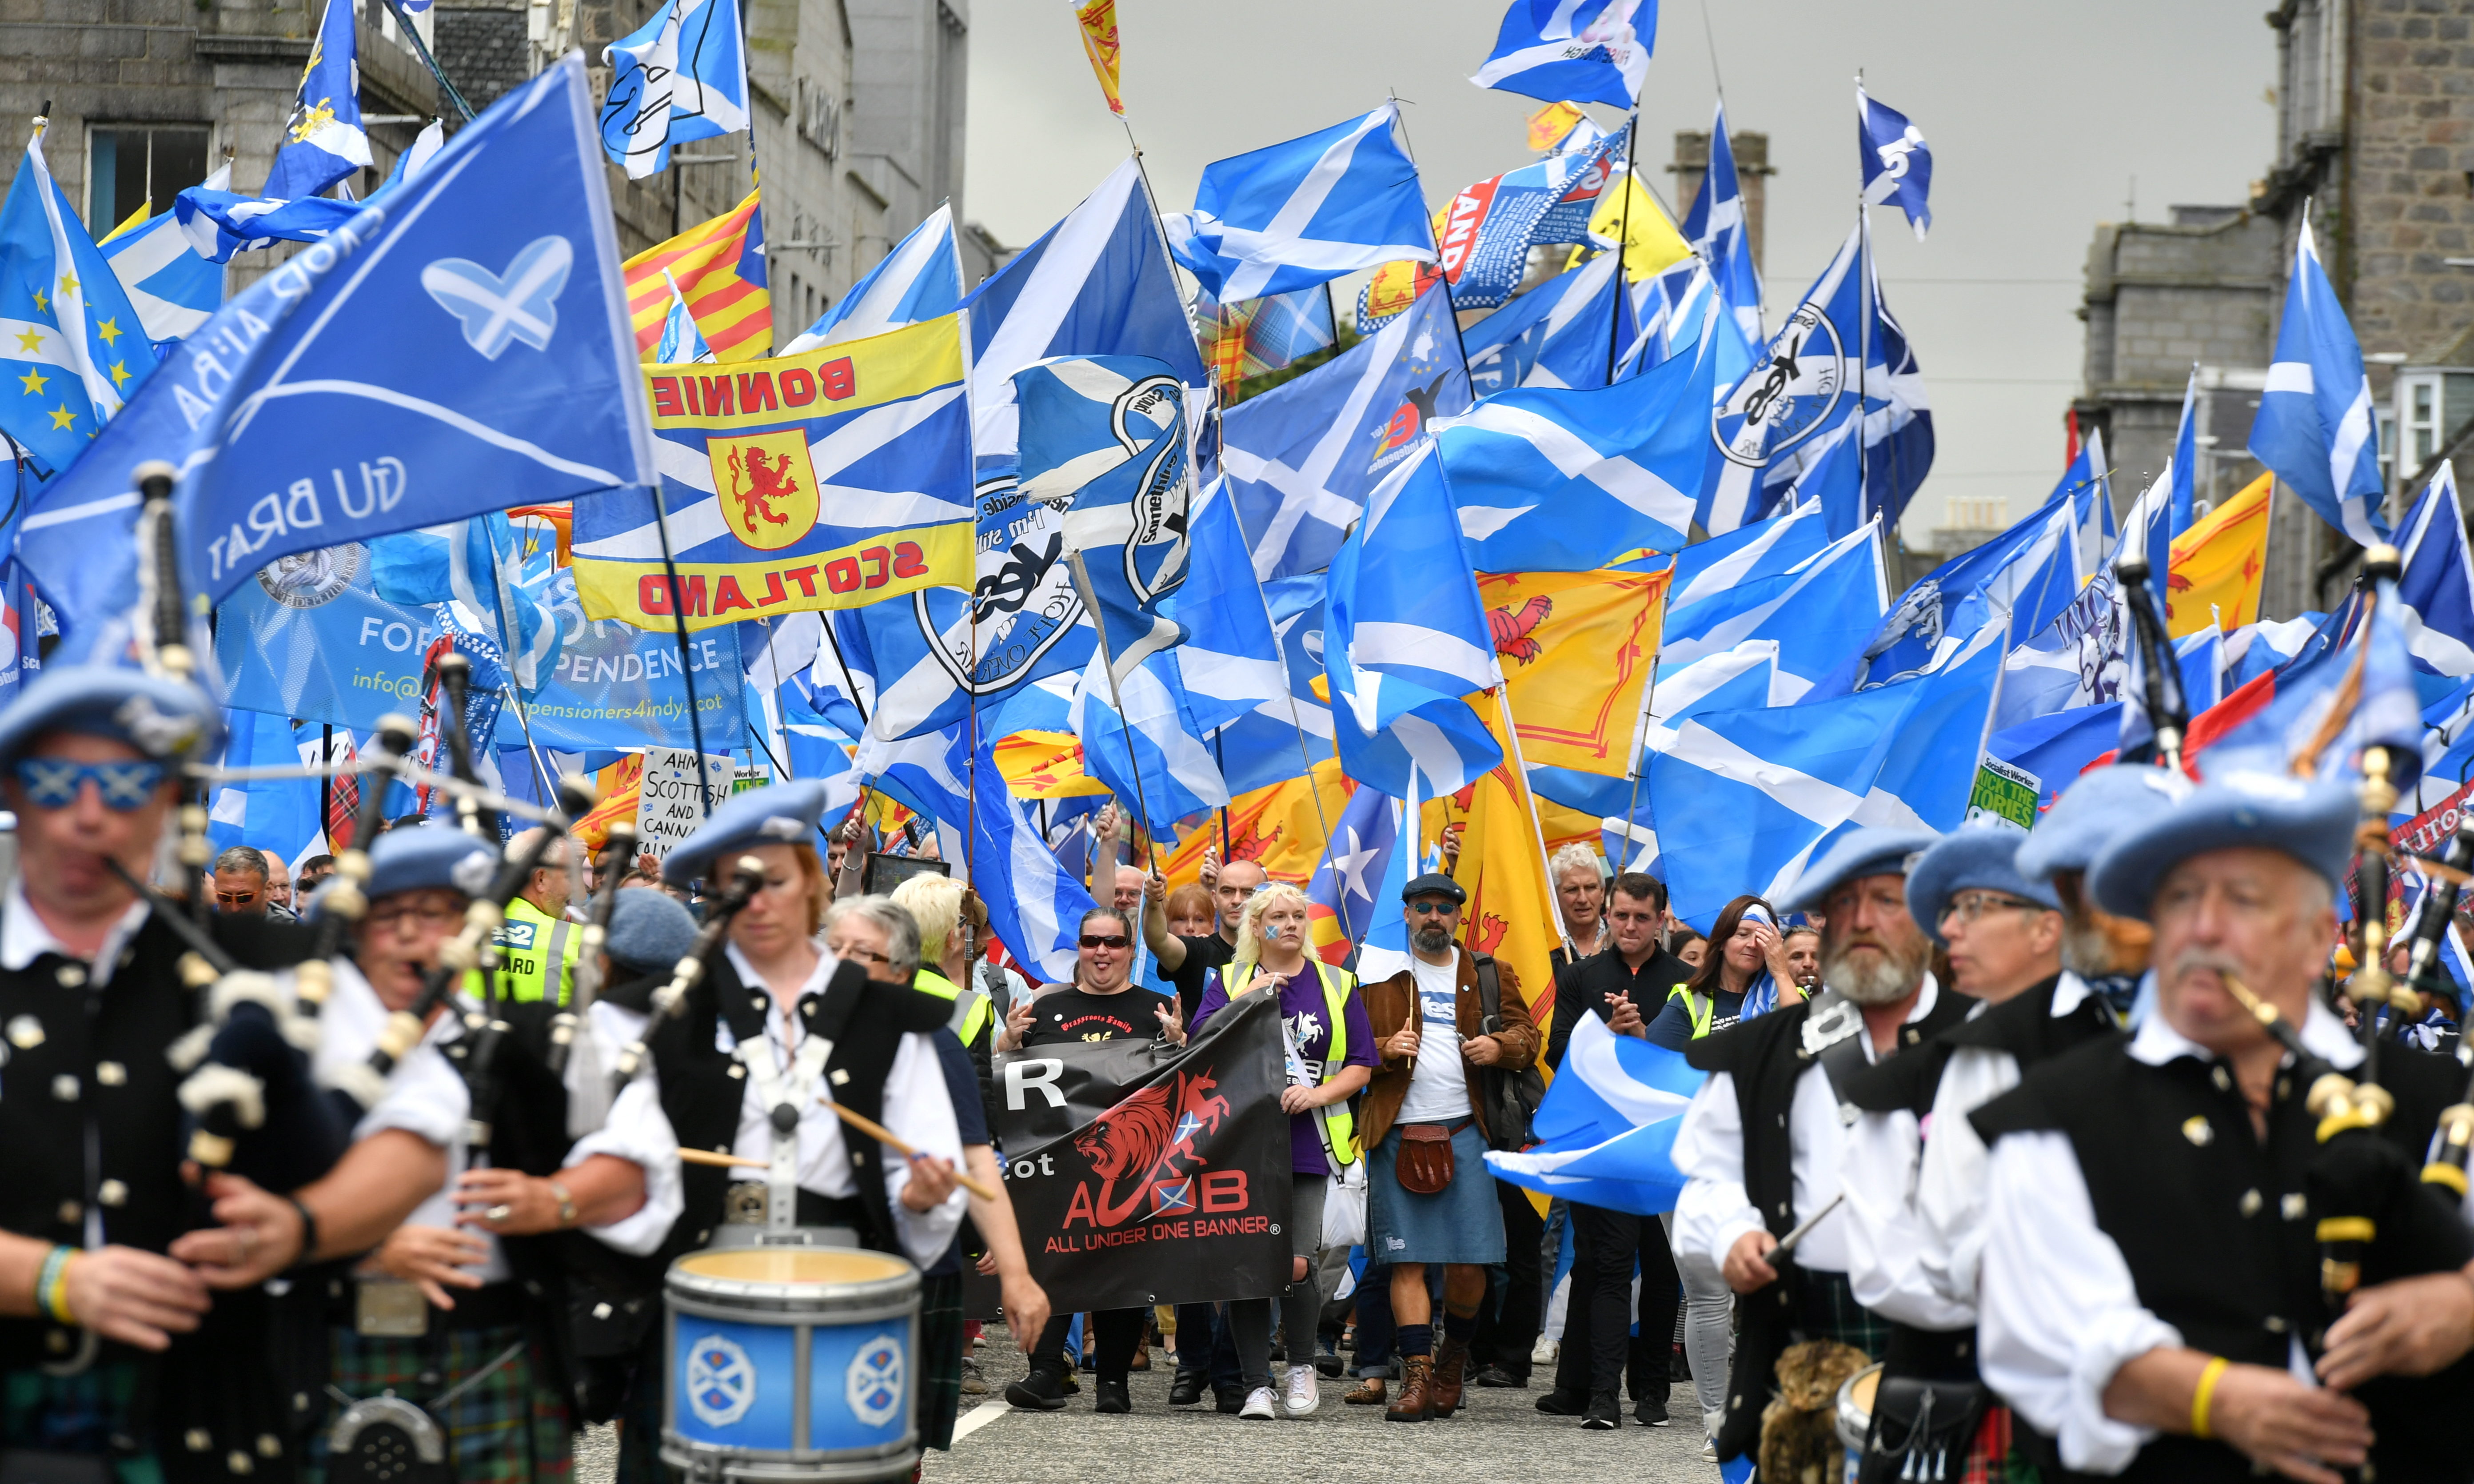 AUOB held a similar march in Aberdeen.